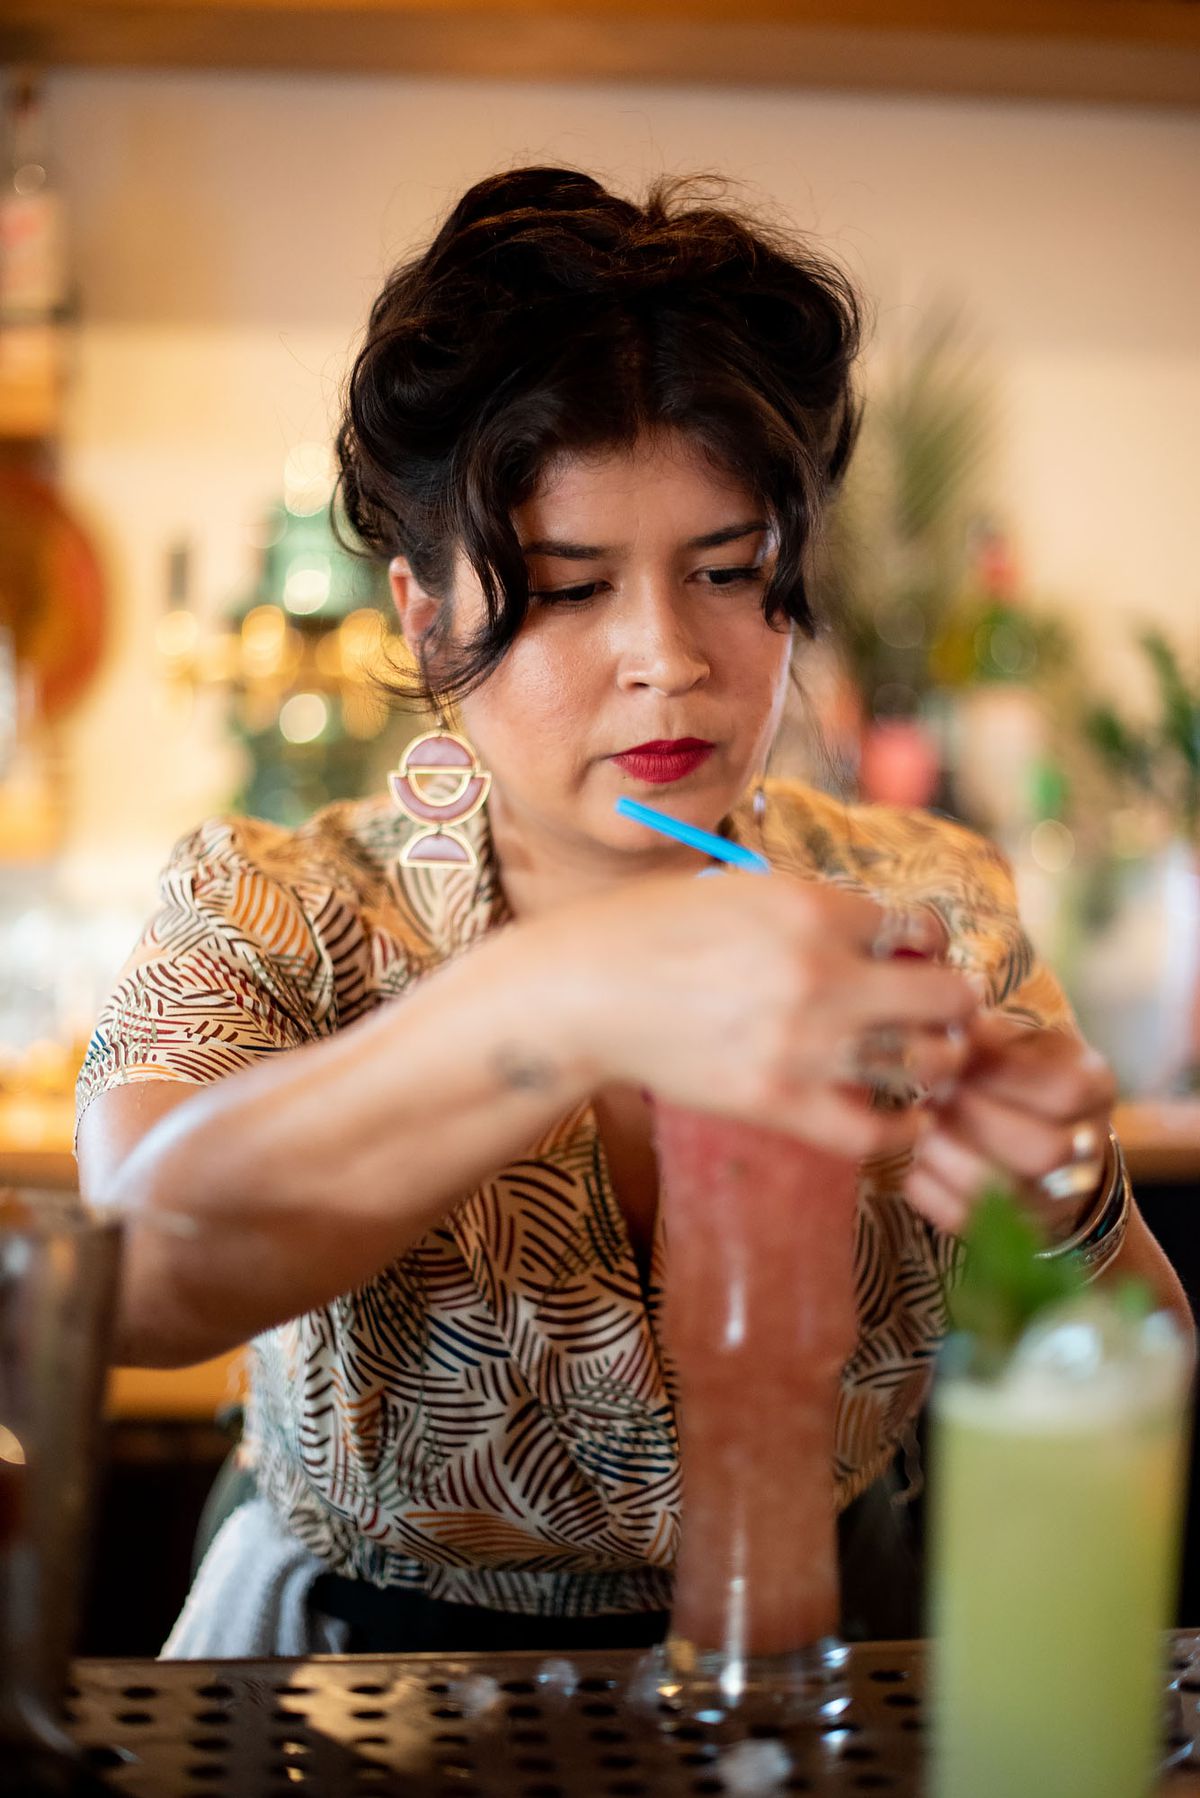 Bartender garnishes a colorful cocktail.